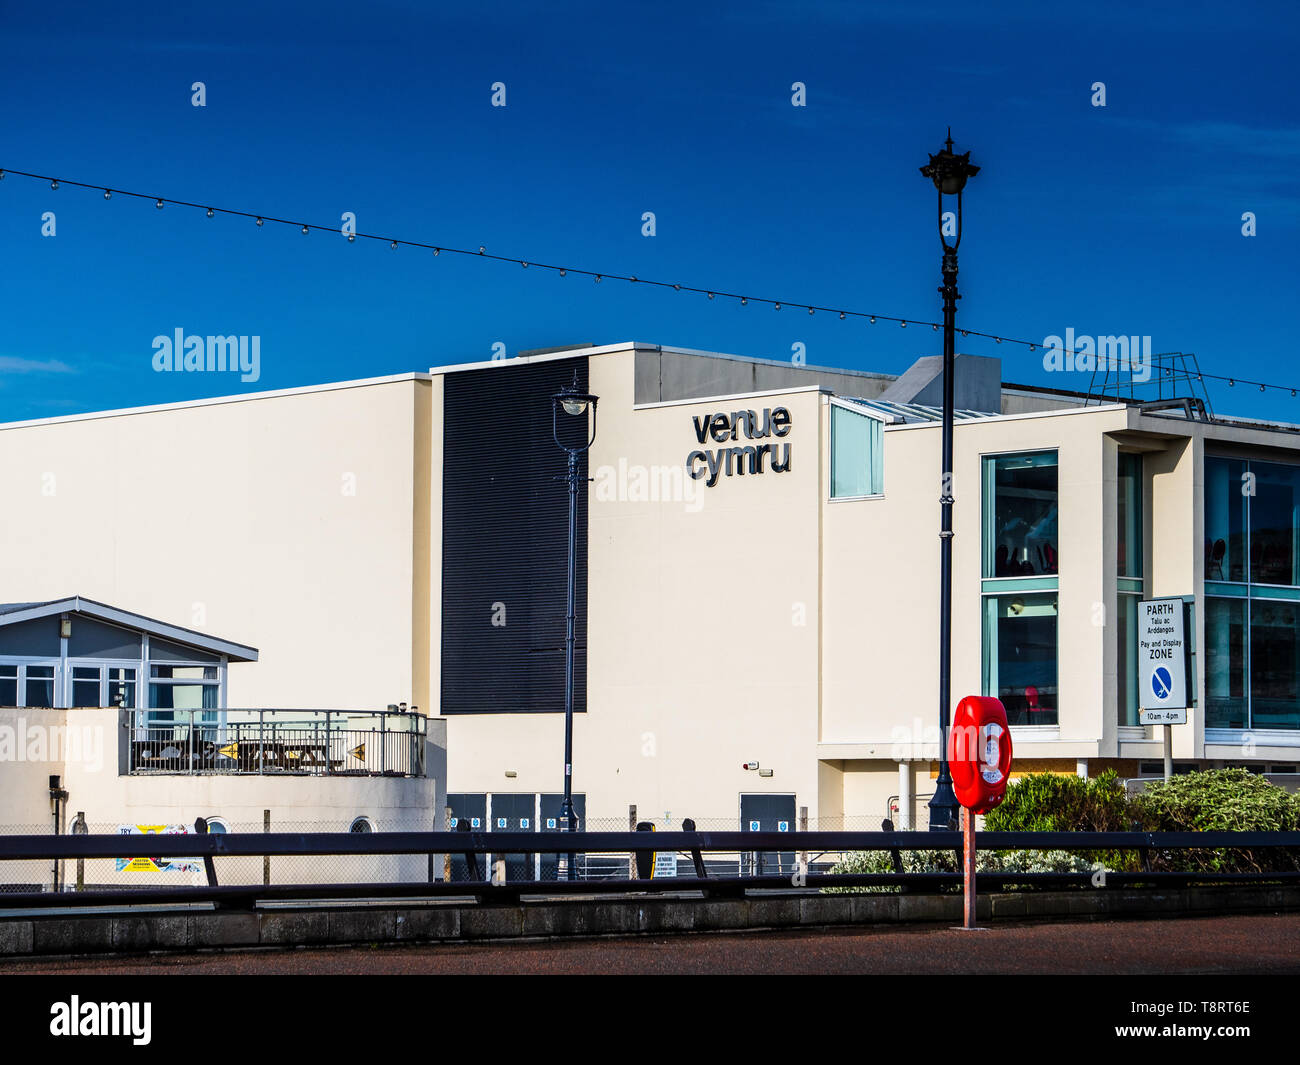 Venue Cymru Theatre, Conference Centre and Arena in Llandudno, Conwy, North Wales. Stock Photo